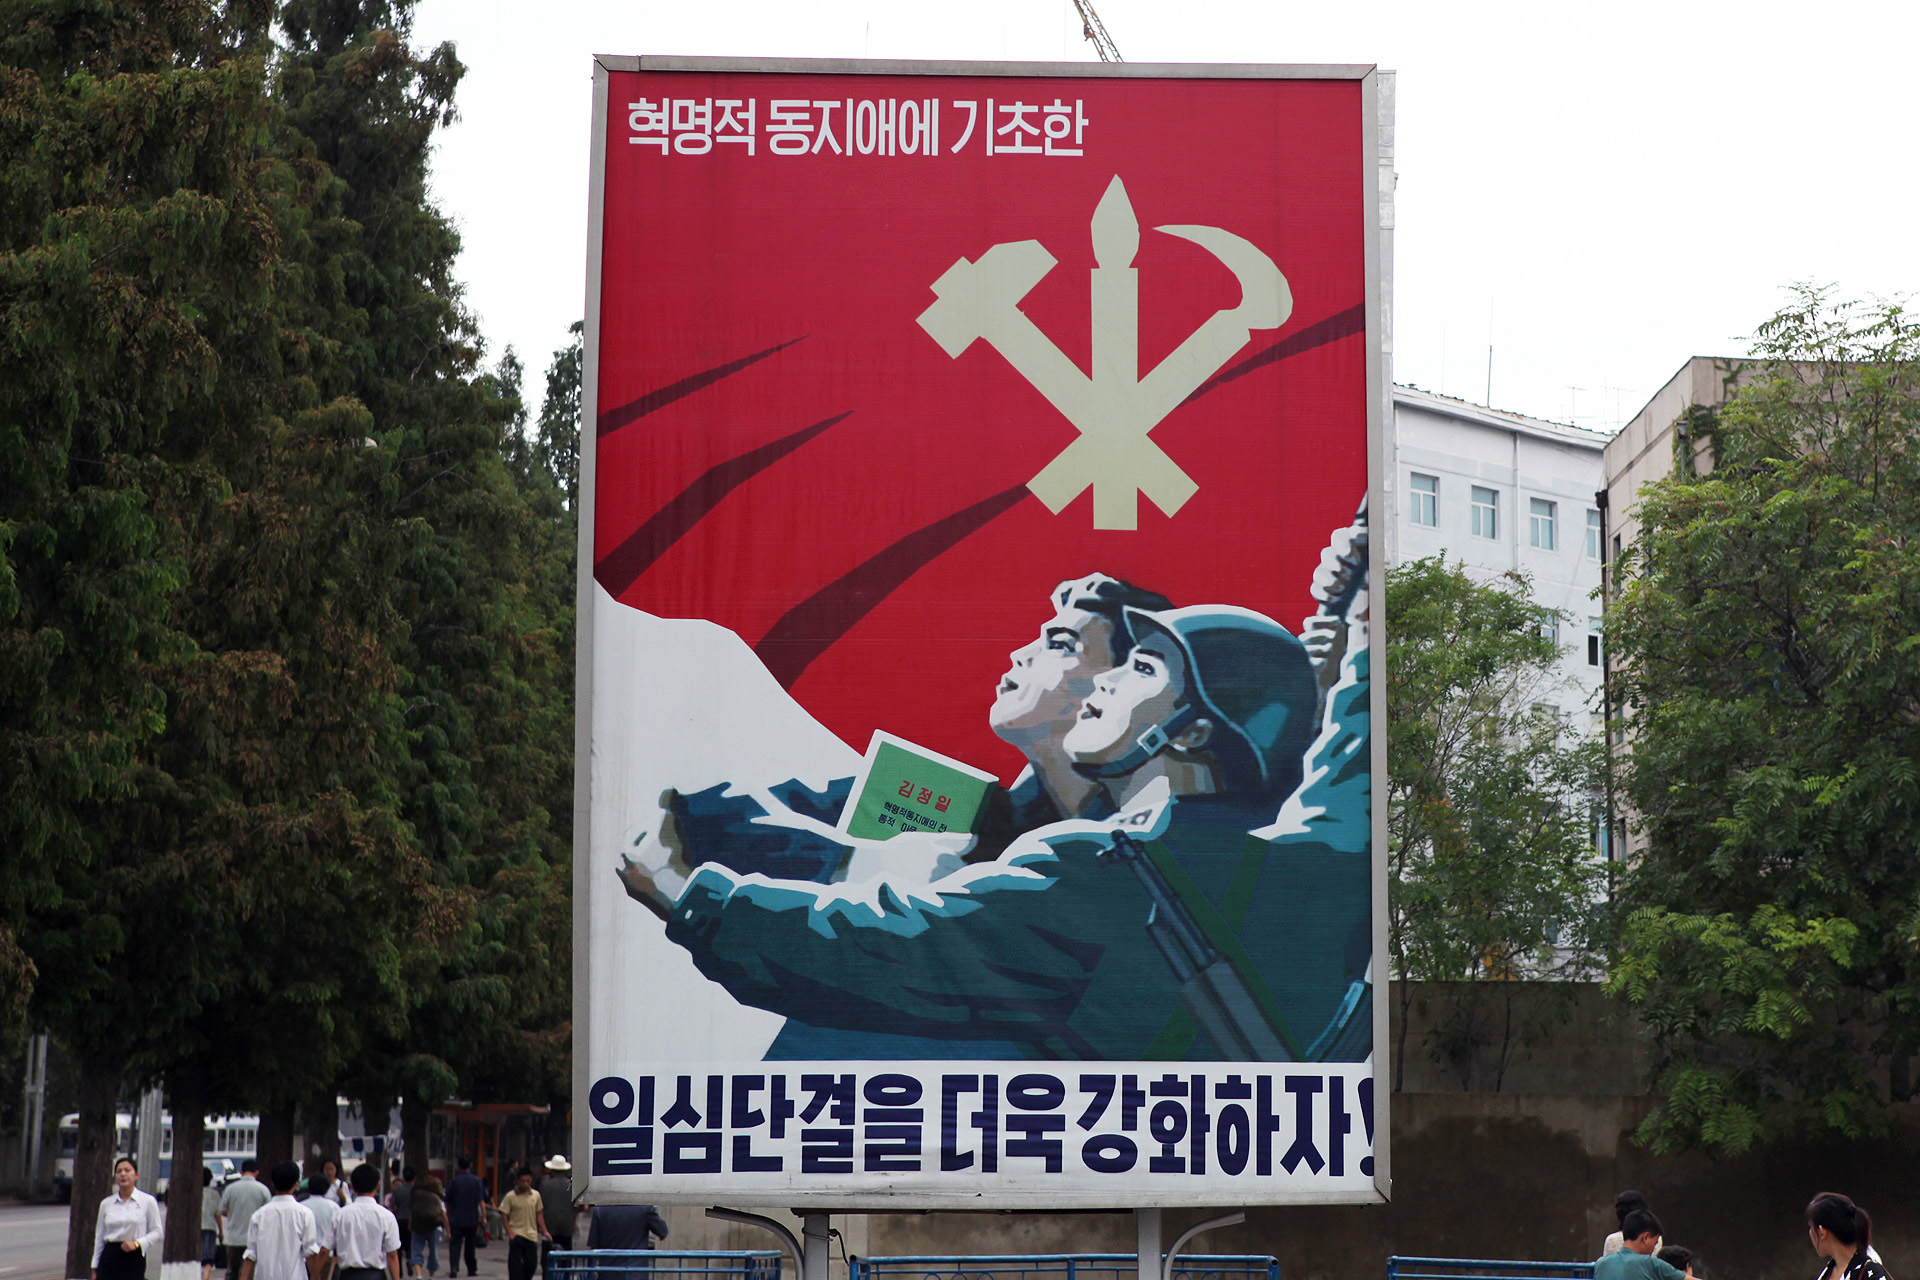 North Korea_Propaganda billboard.jpg